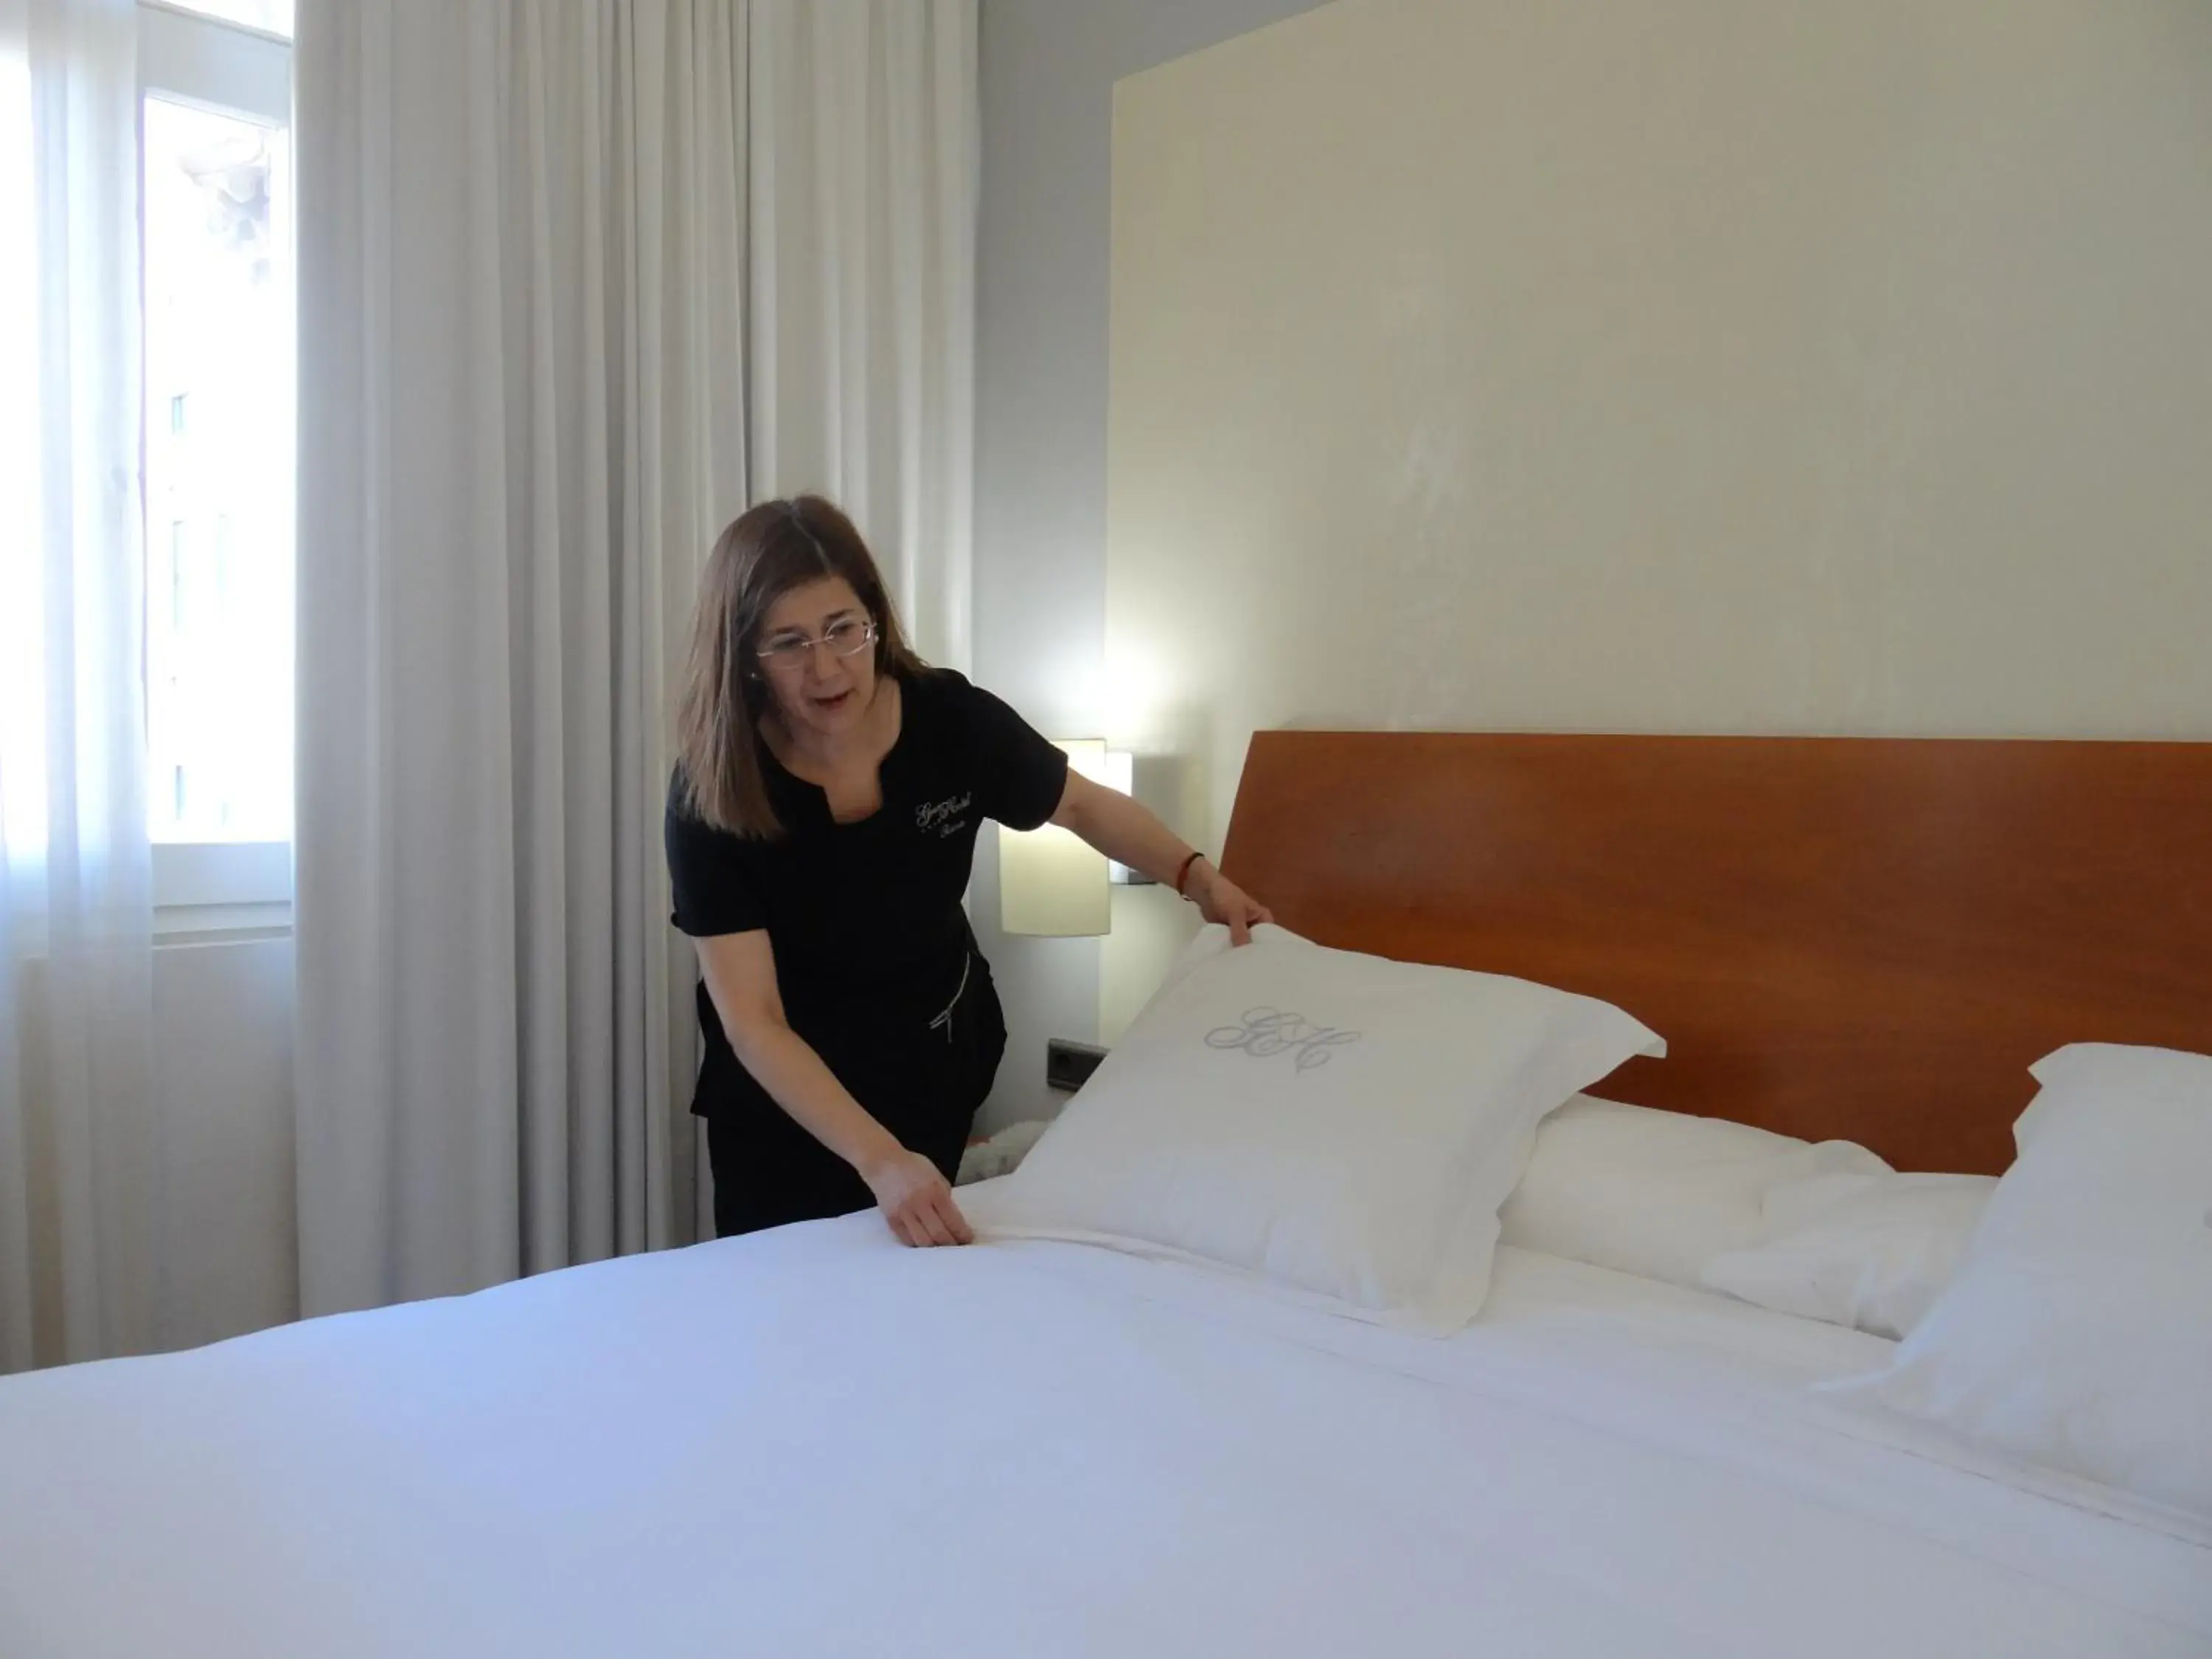 Staff in Gran Hotel Albacete